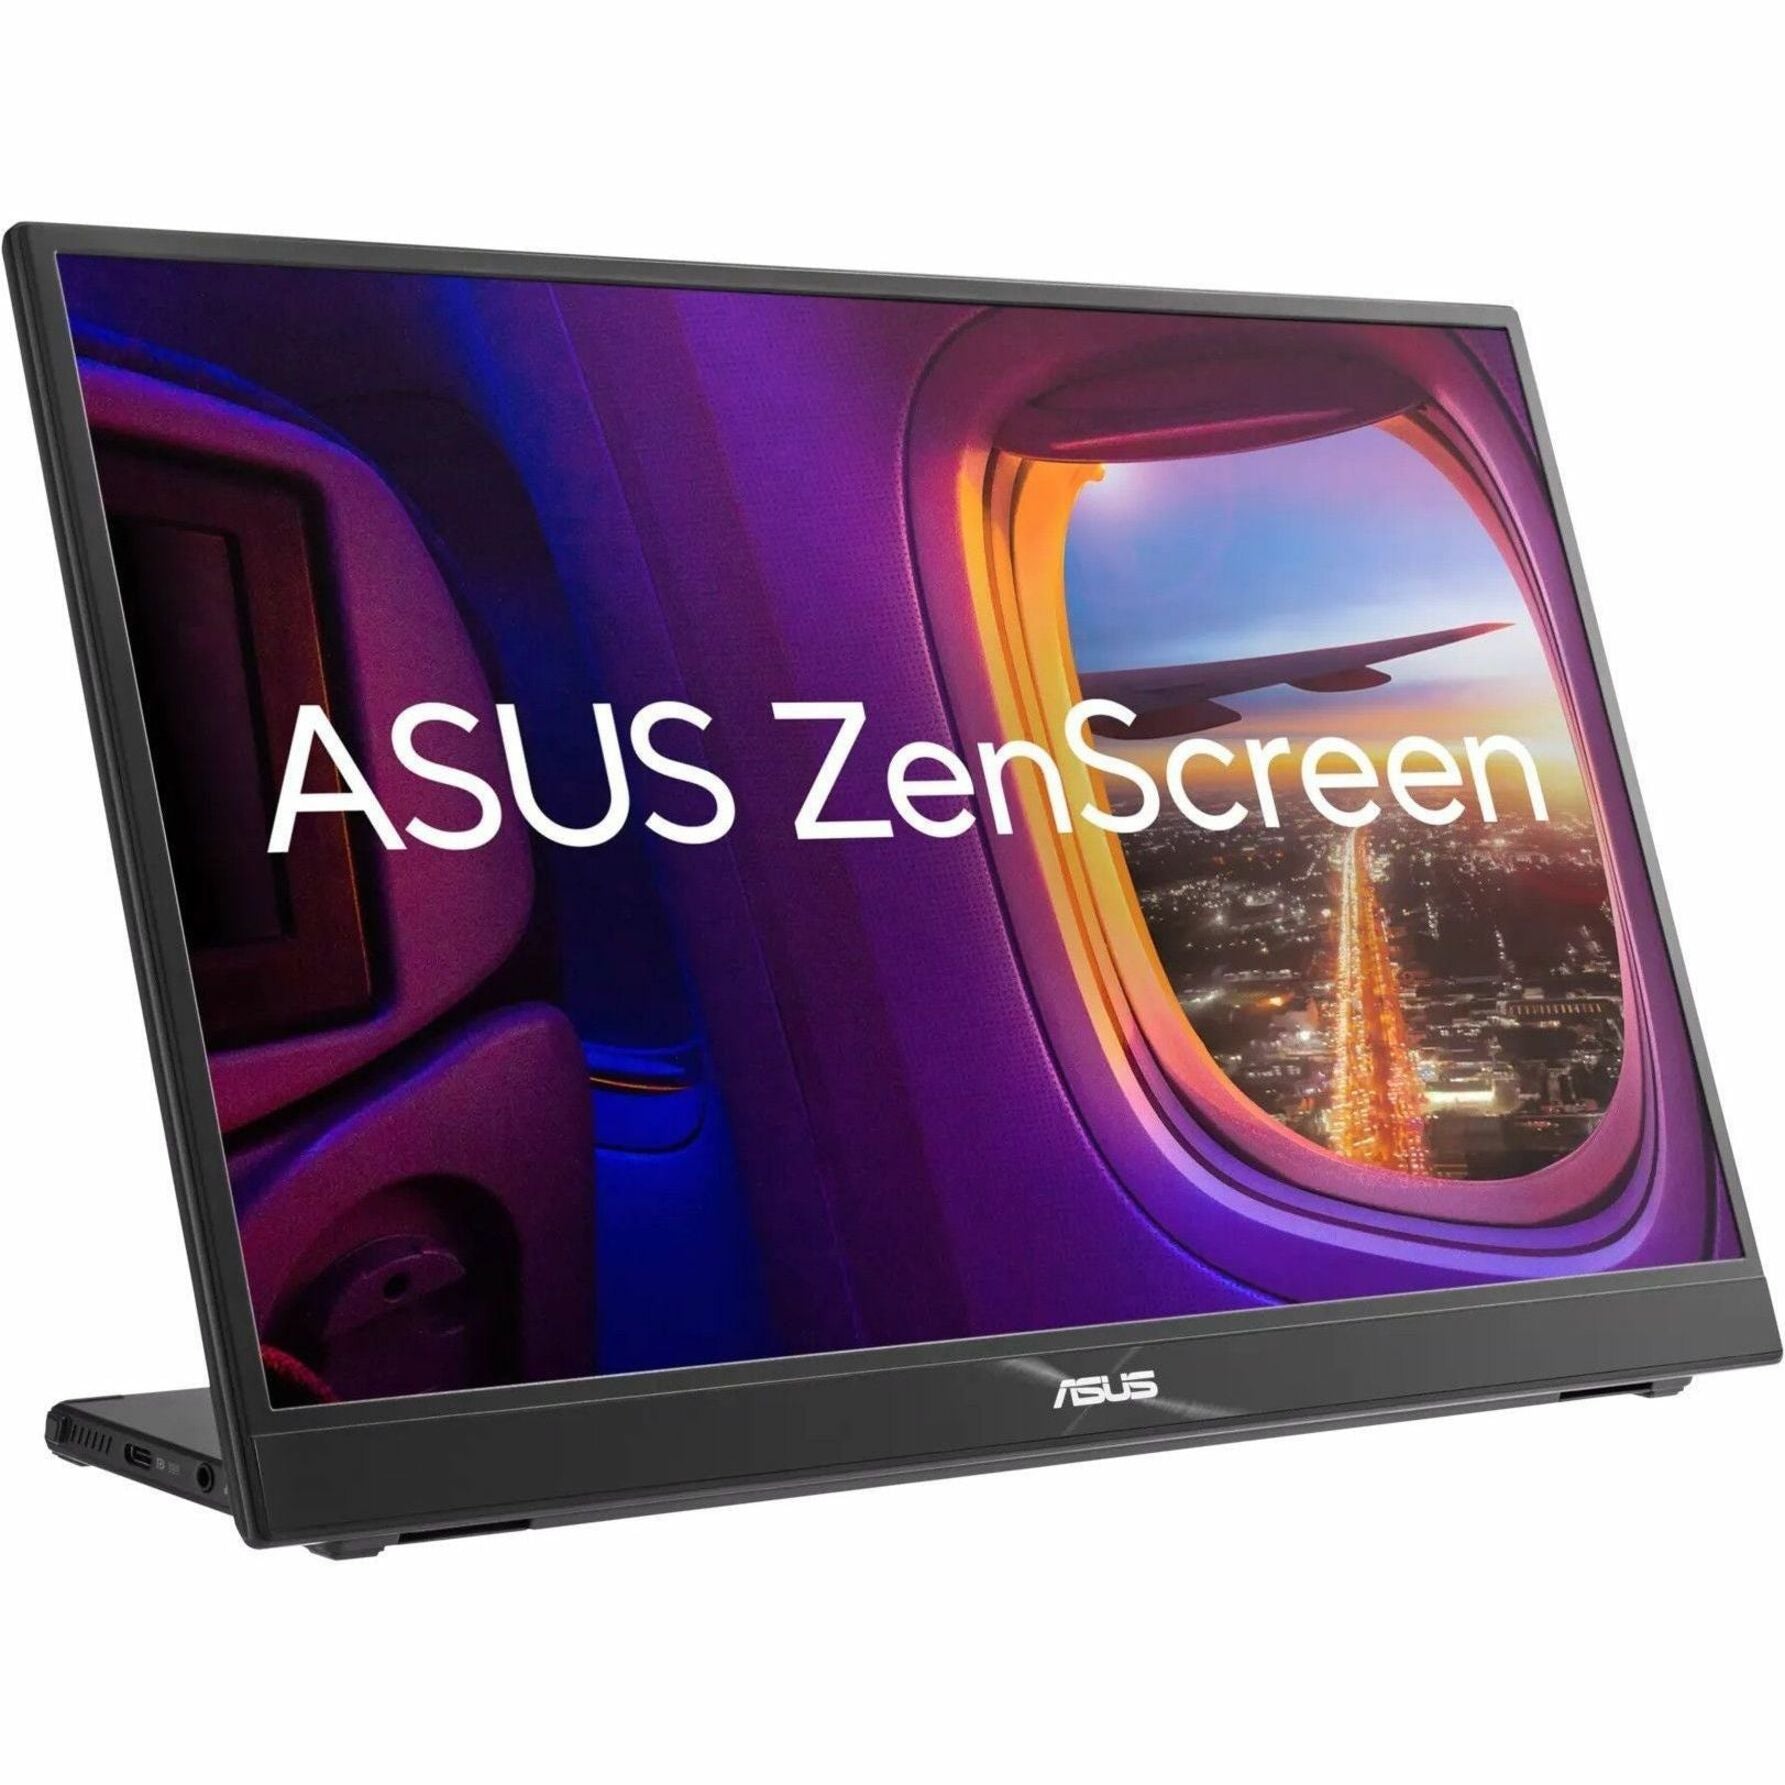 Asus MB16QHG ZenScreen 16" WQXGA LED Monitor, 120Hz, 500 Nit Brightness, 100% DCI-P3 Color Gamut